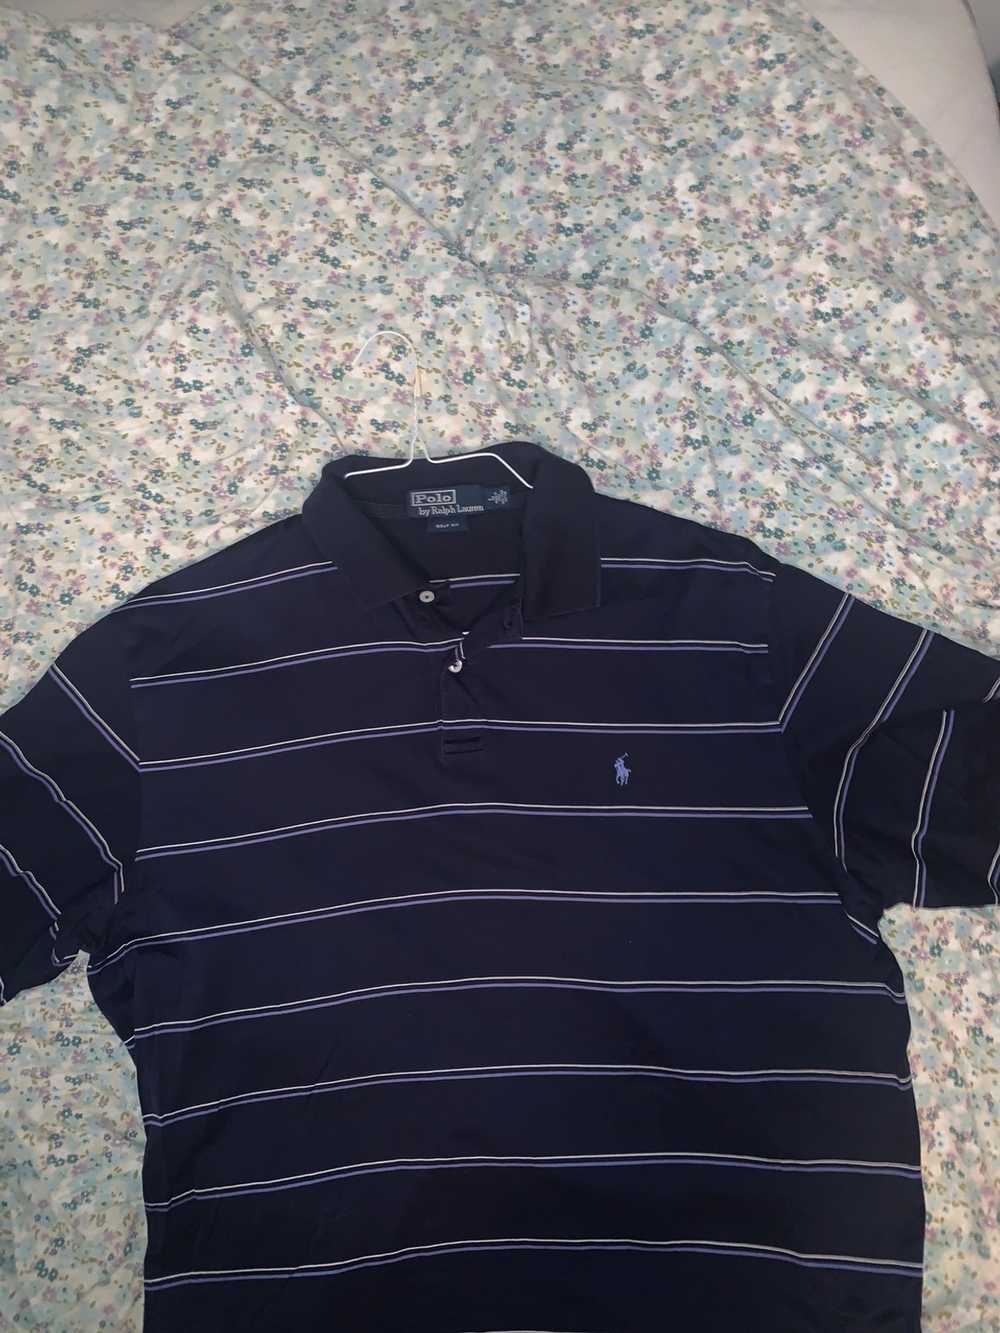 Polo Ralph Lauren Men’s Polo Collared T-Shirt - image 3